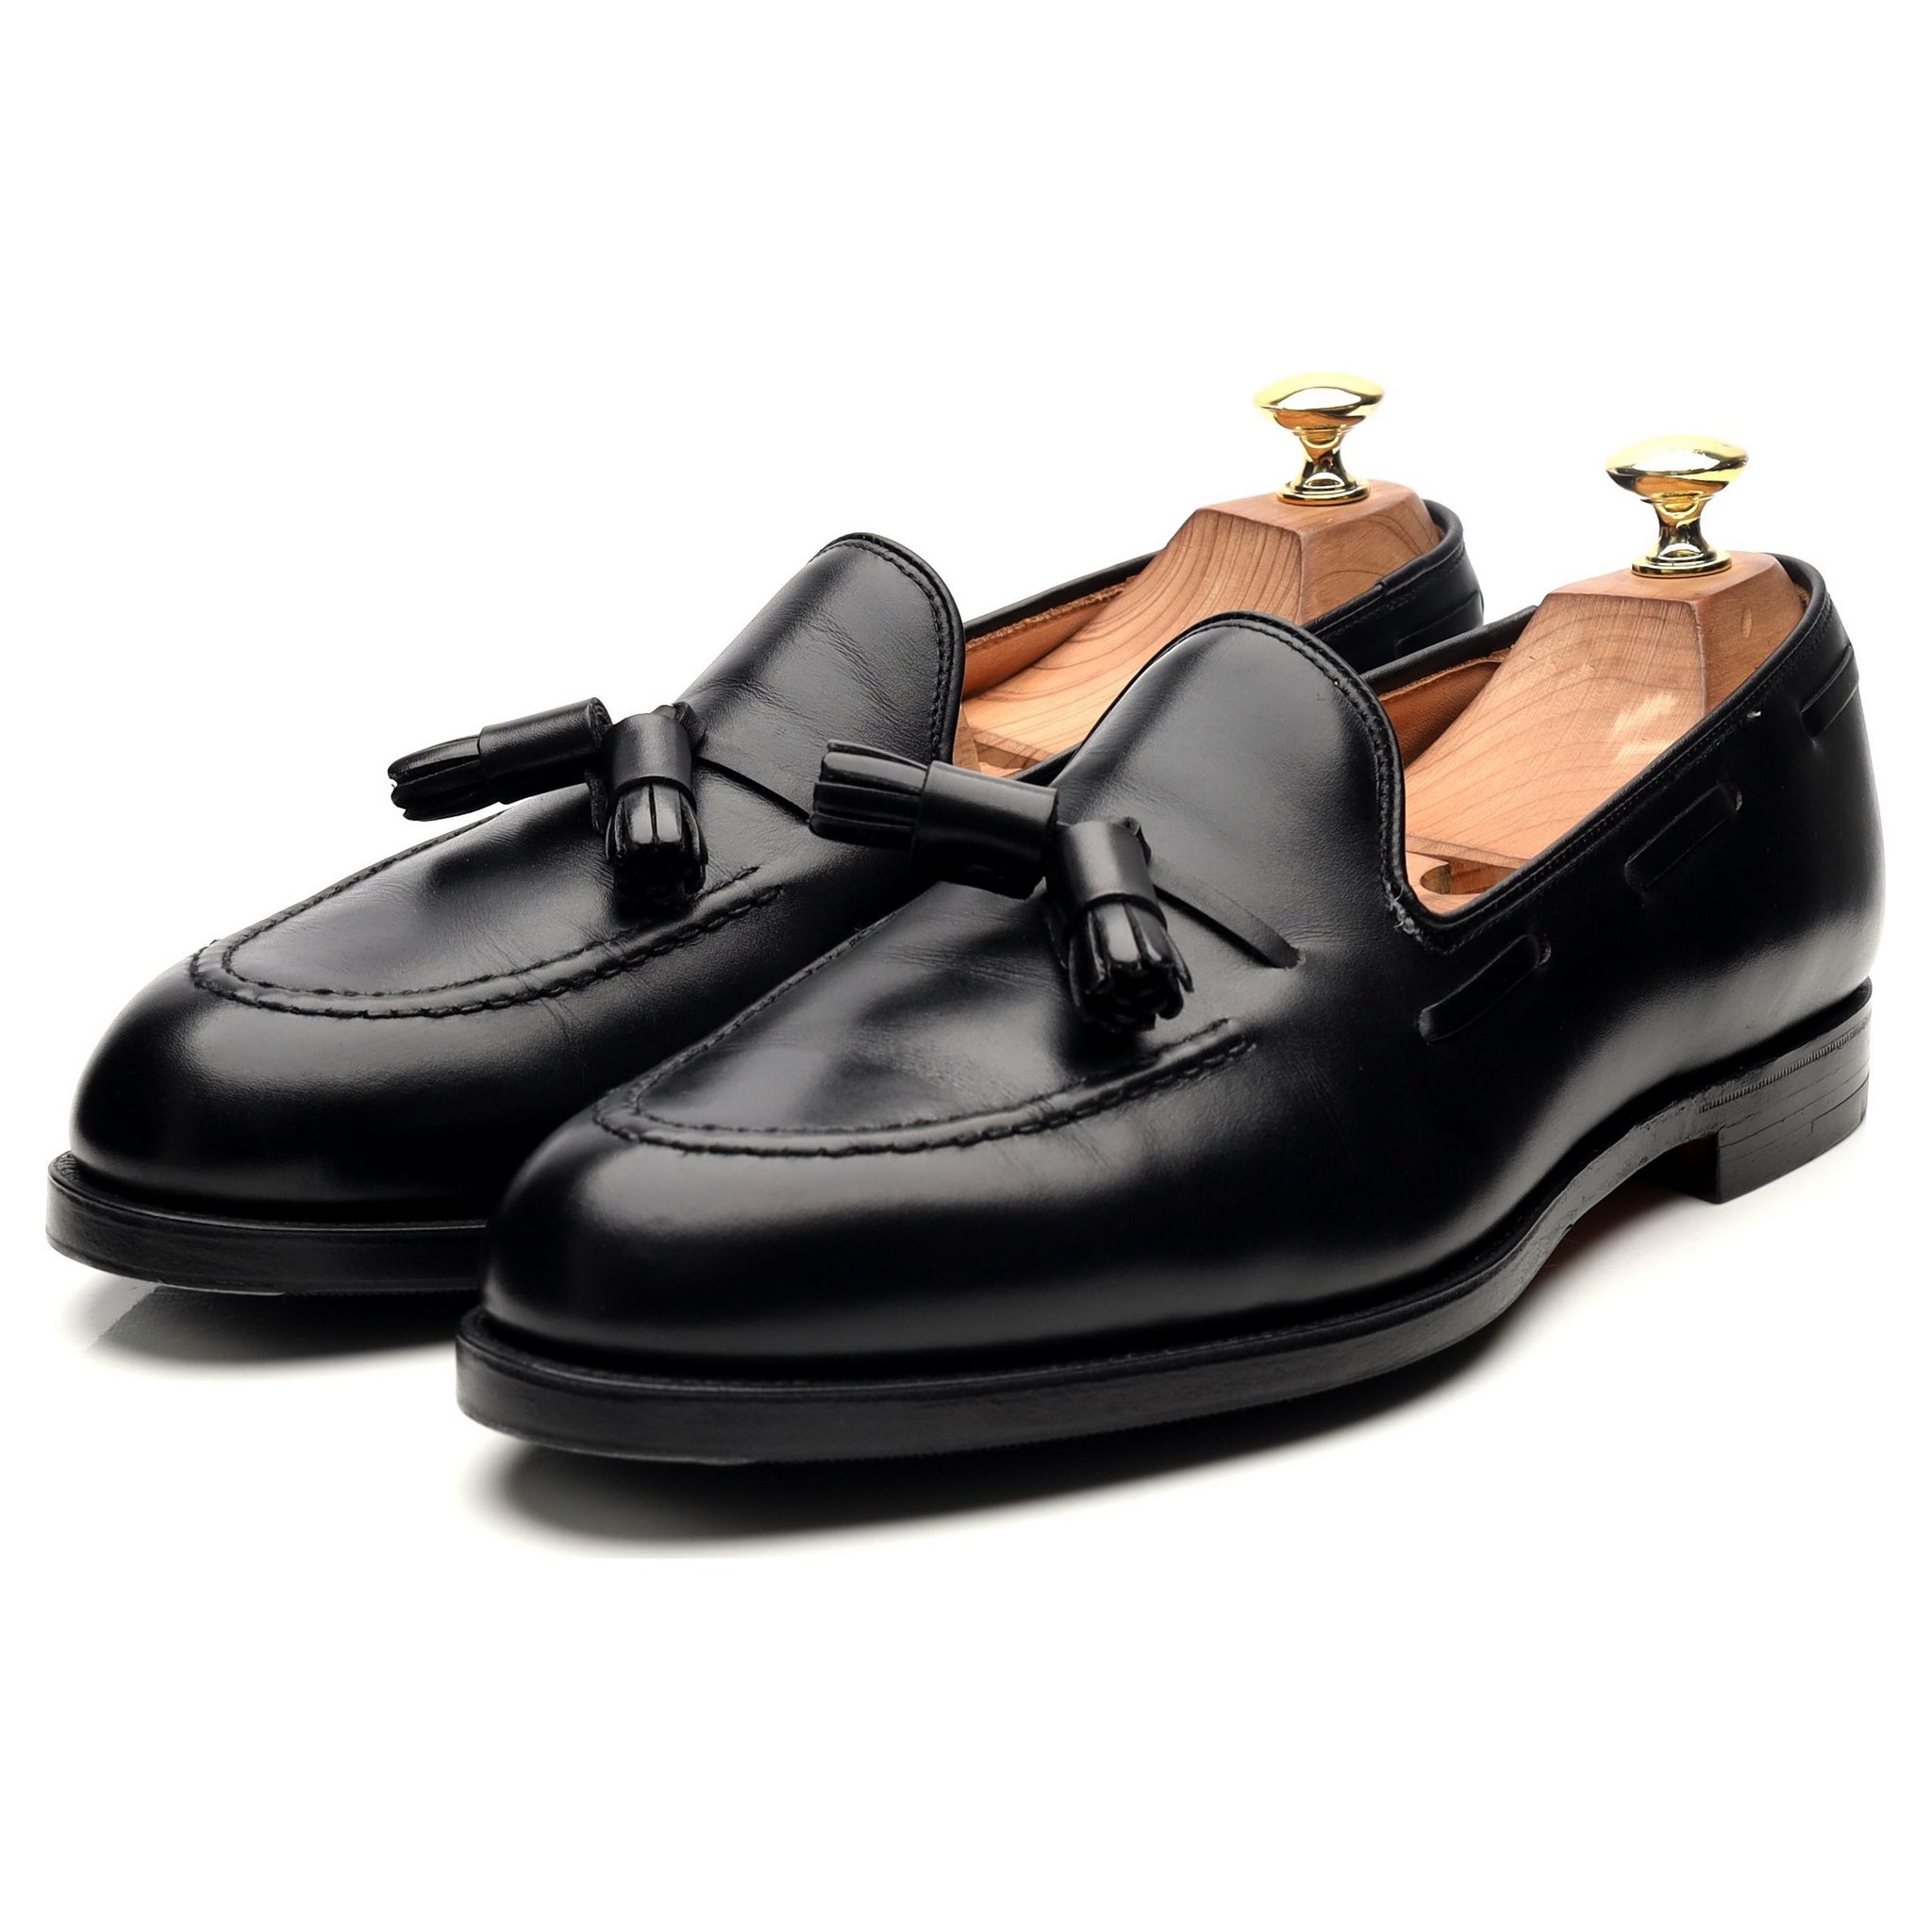 Cavendish 2' Black Leather Tassel Loafers UK 8 E - Abbot's Shoes